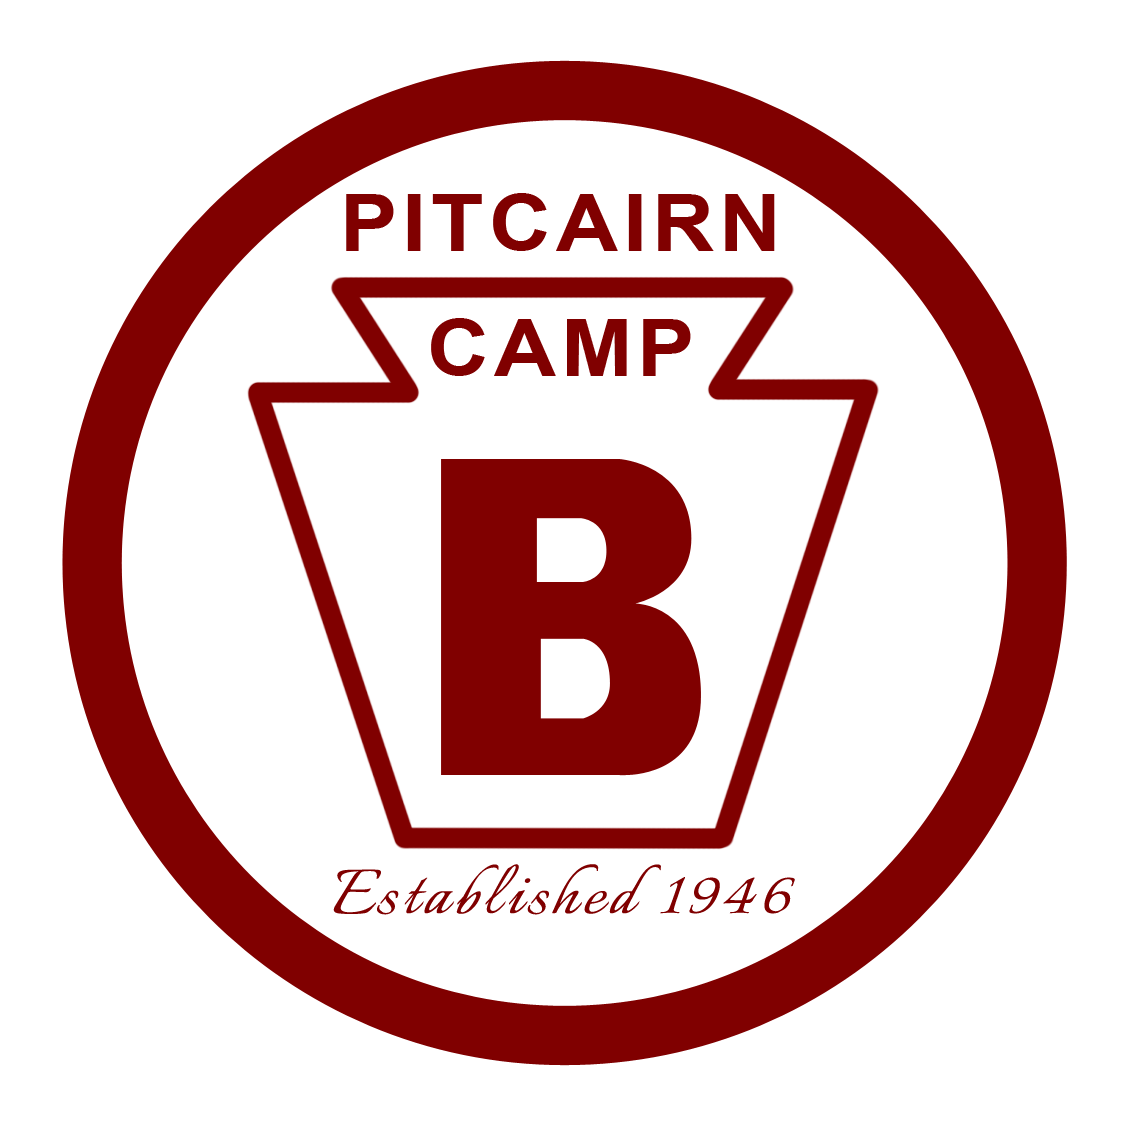 Pitcairn Camp "B"